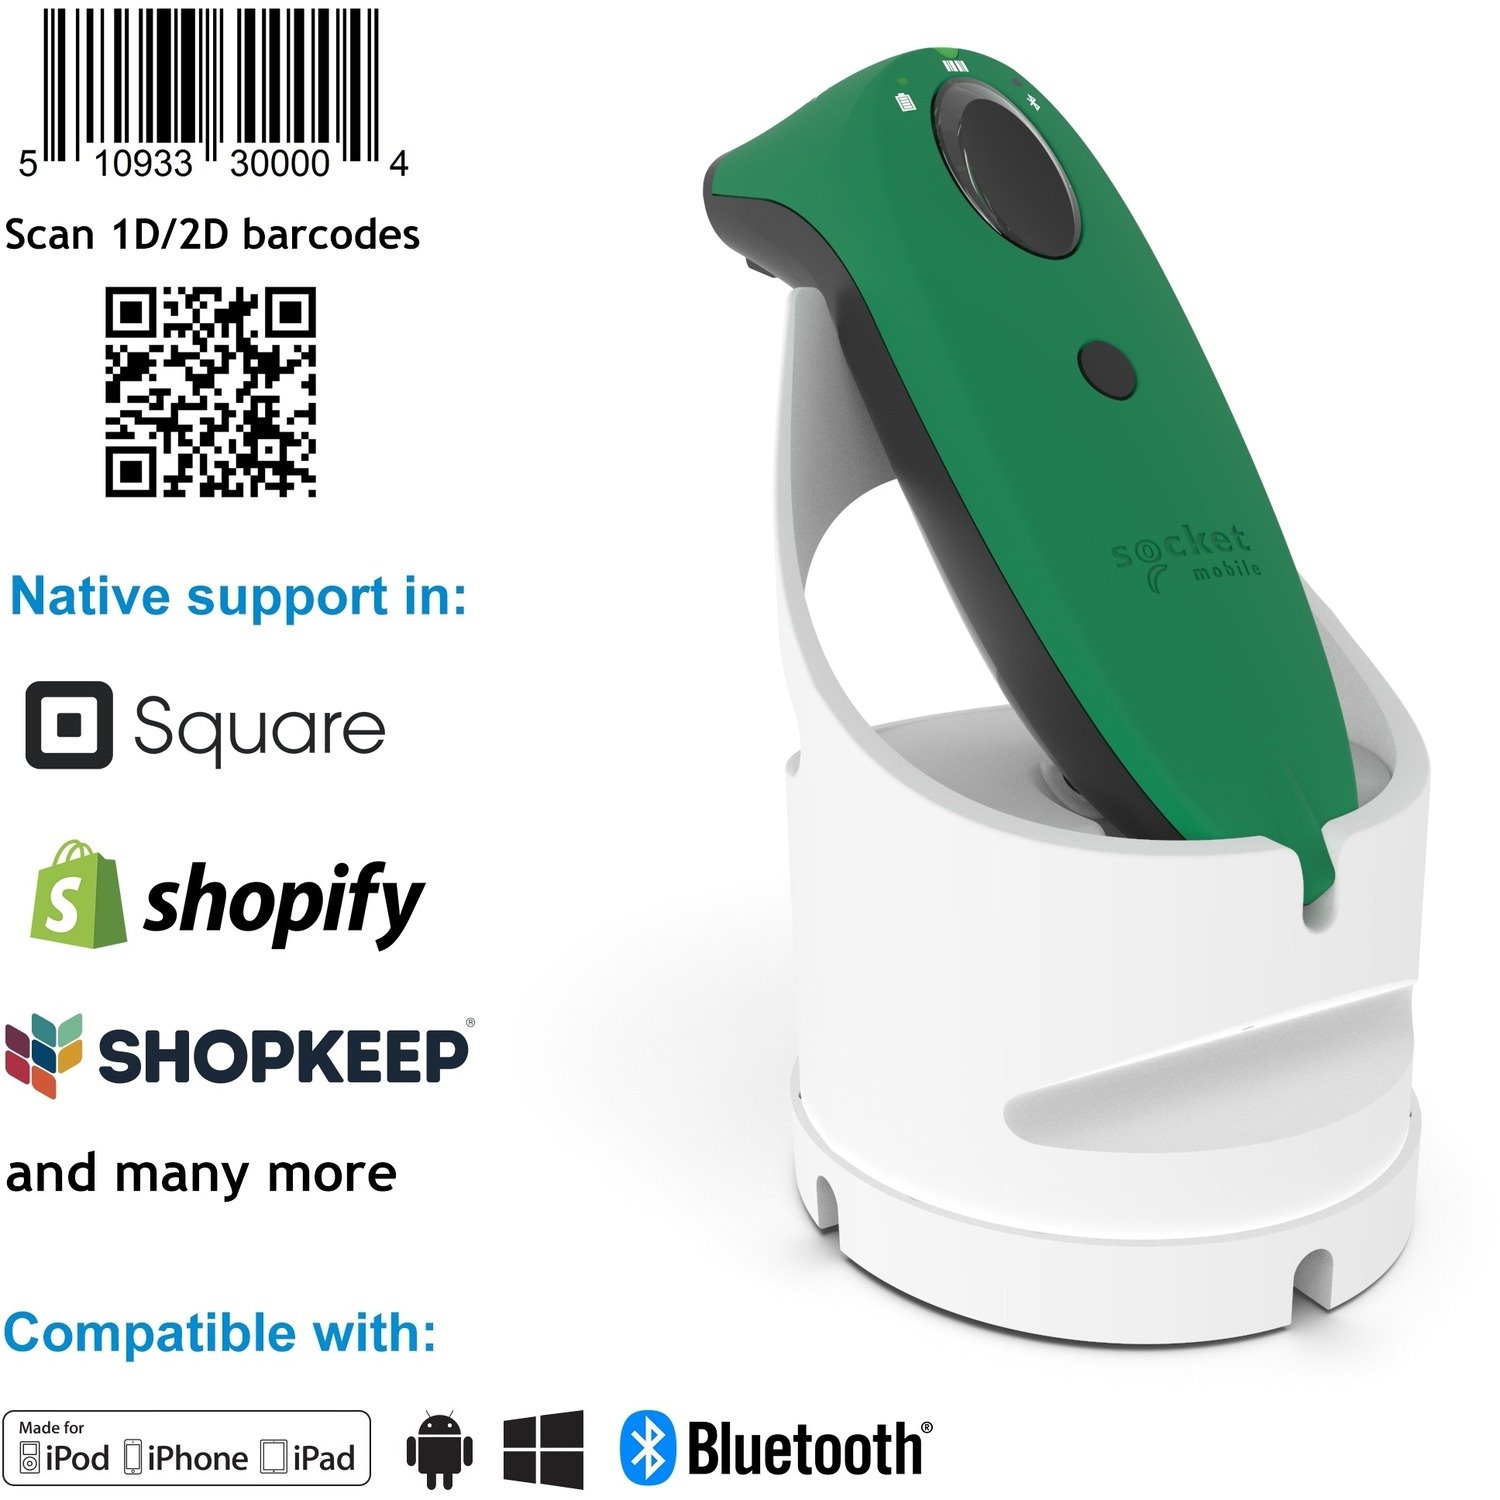 Socket Mobile SocketScan S740 Handheld Barcode Scanner - Wireless Connectivity - Green, White